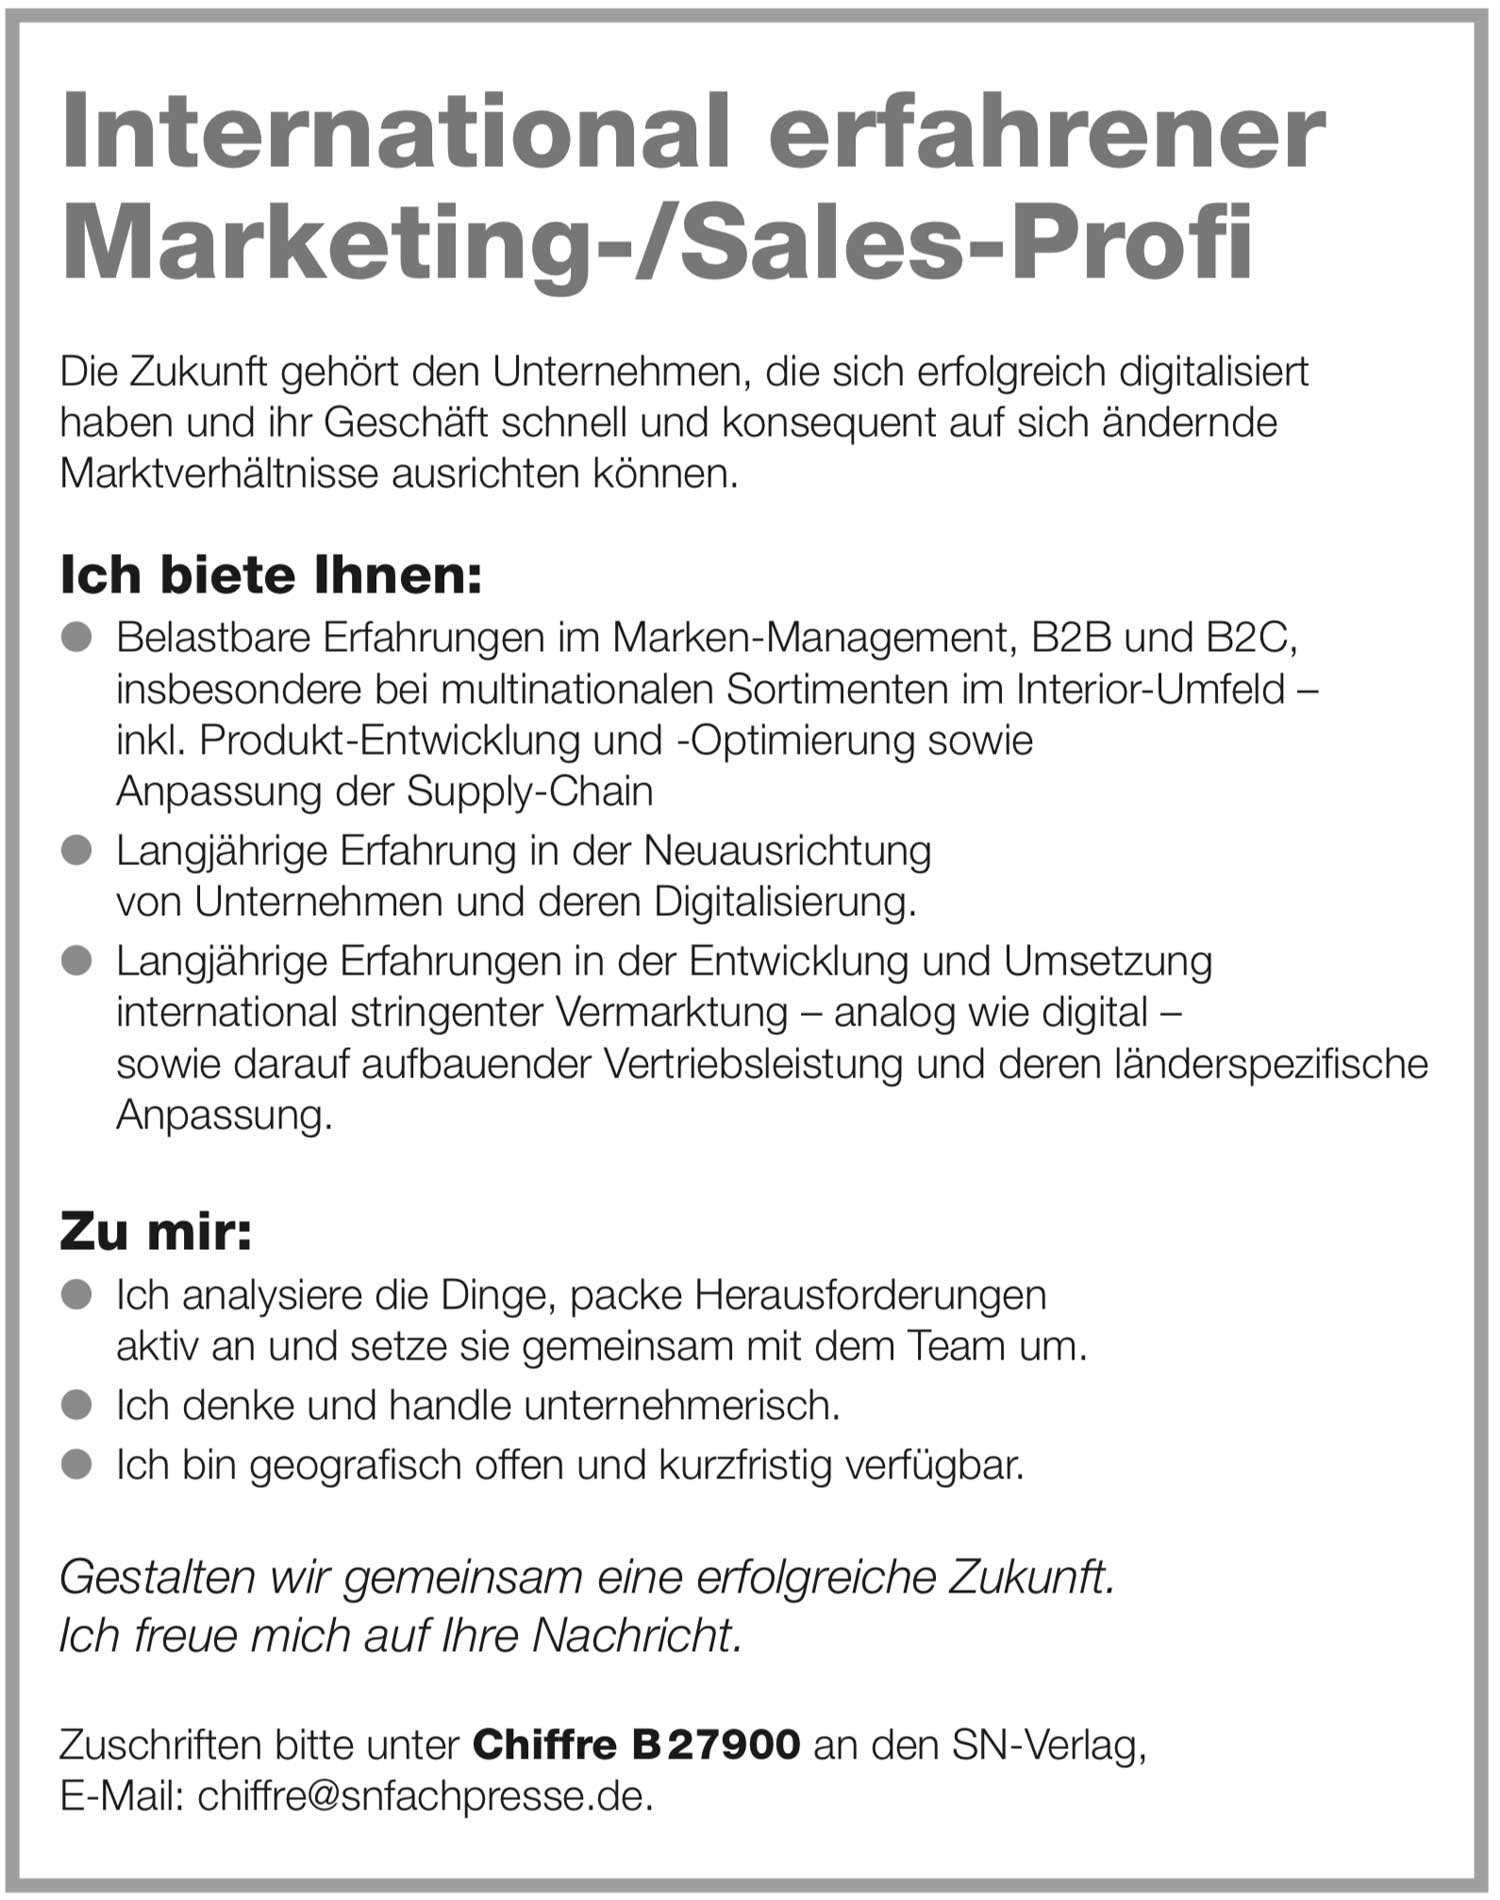 International erfahrener Marketing-/Sales-Profi